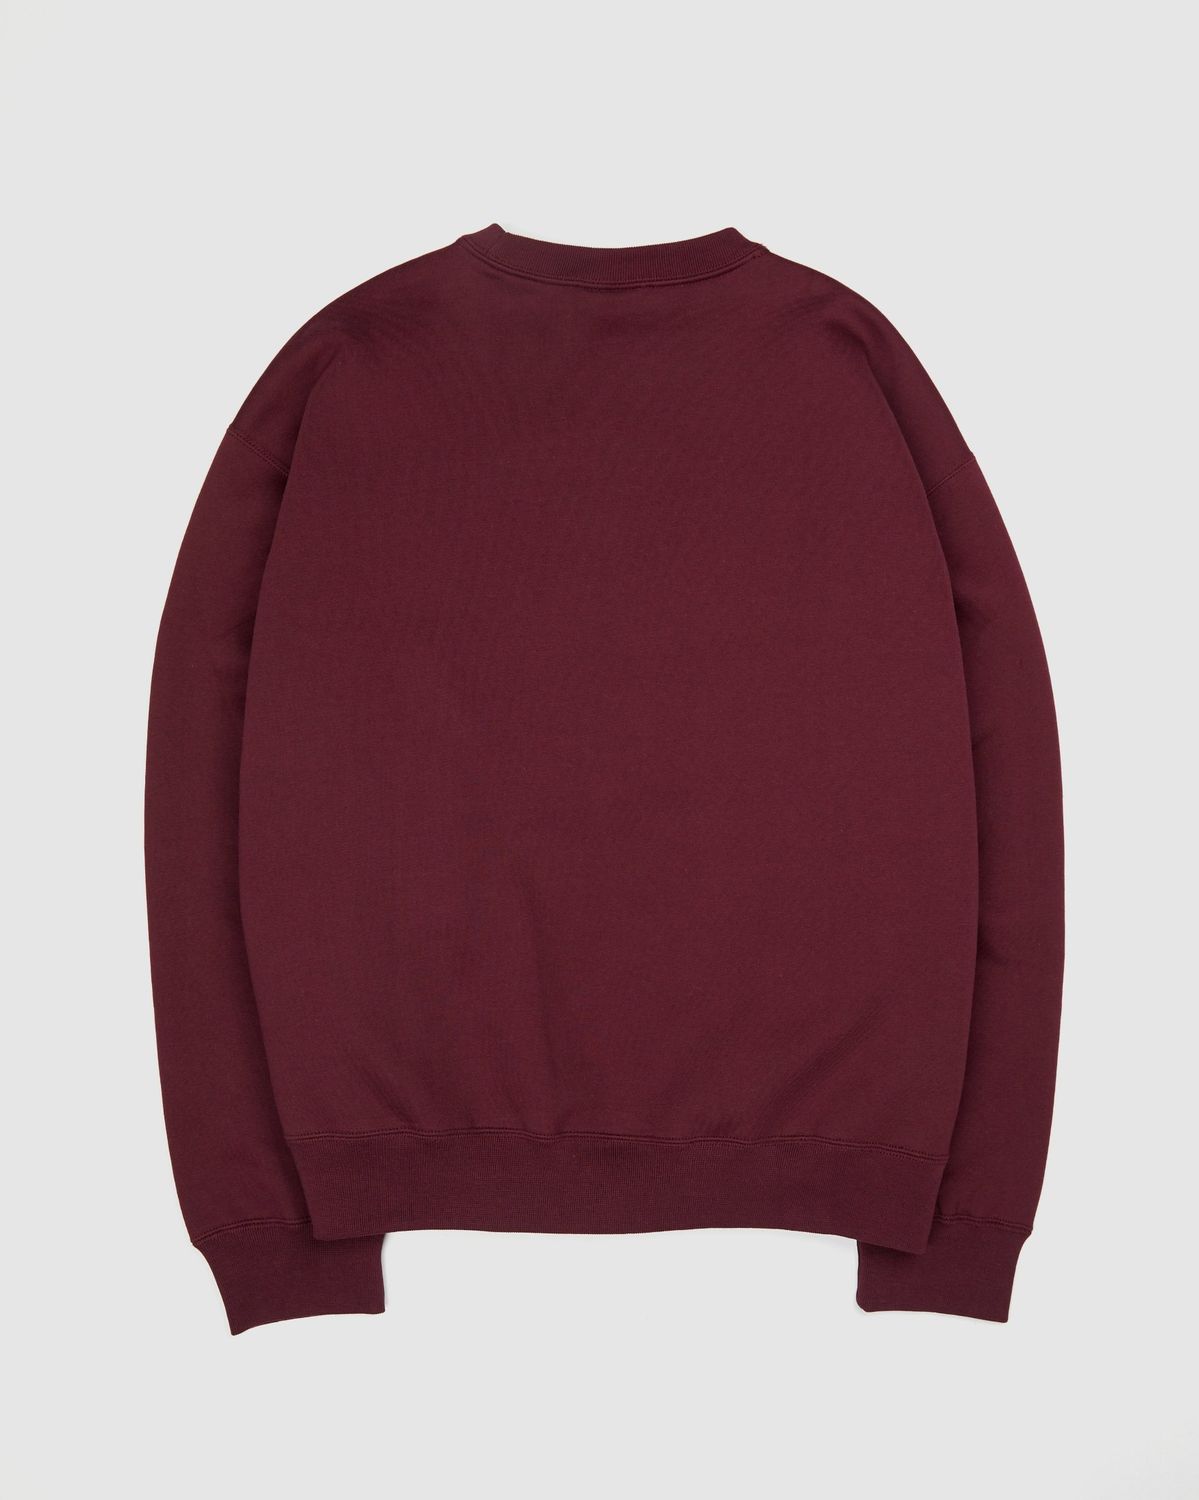 Nike ACG – Allover Print Crew Sweater Burgundy - Sweats - Red - Image 2